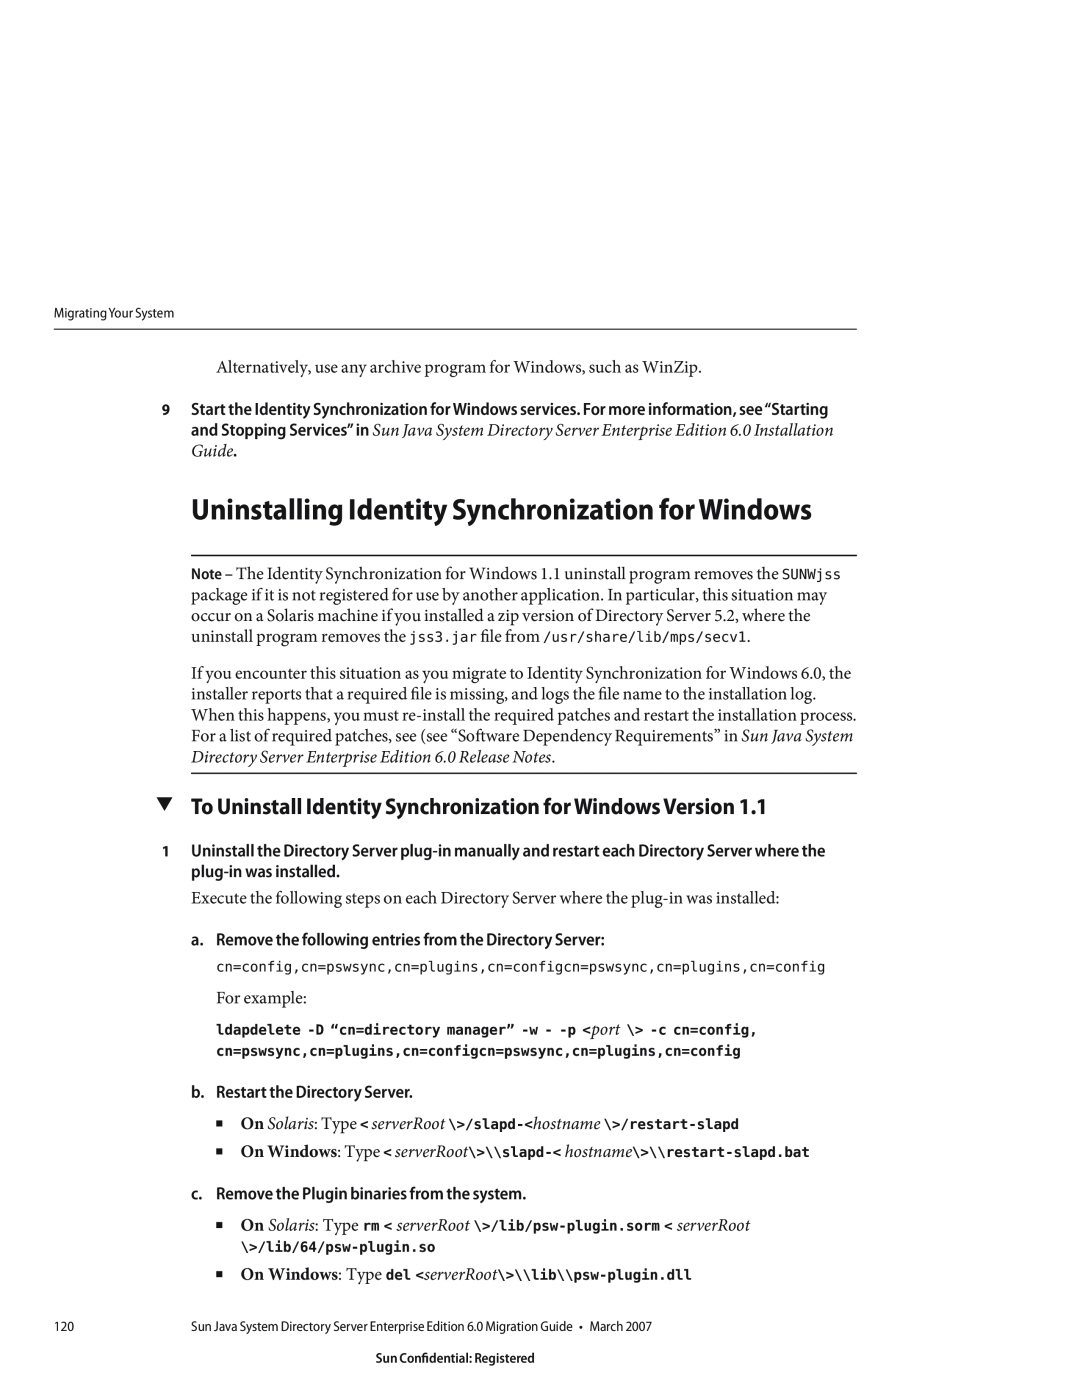 Sun Microsystems 8190994 manual Uninstalling Identity Synchronization for Windows, lib/64/psw-plugin.so 